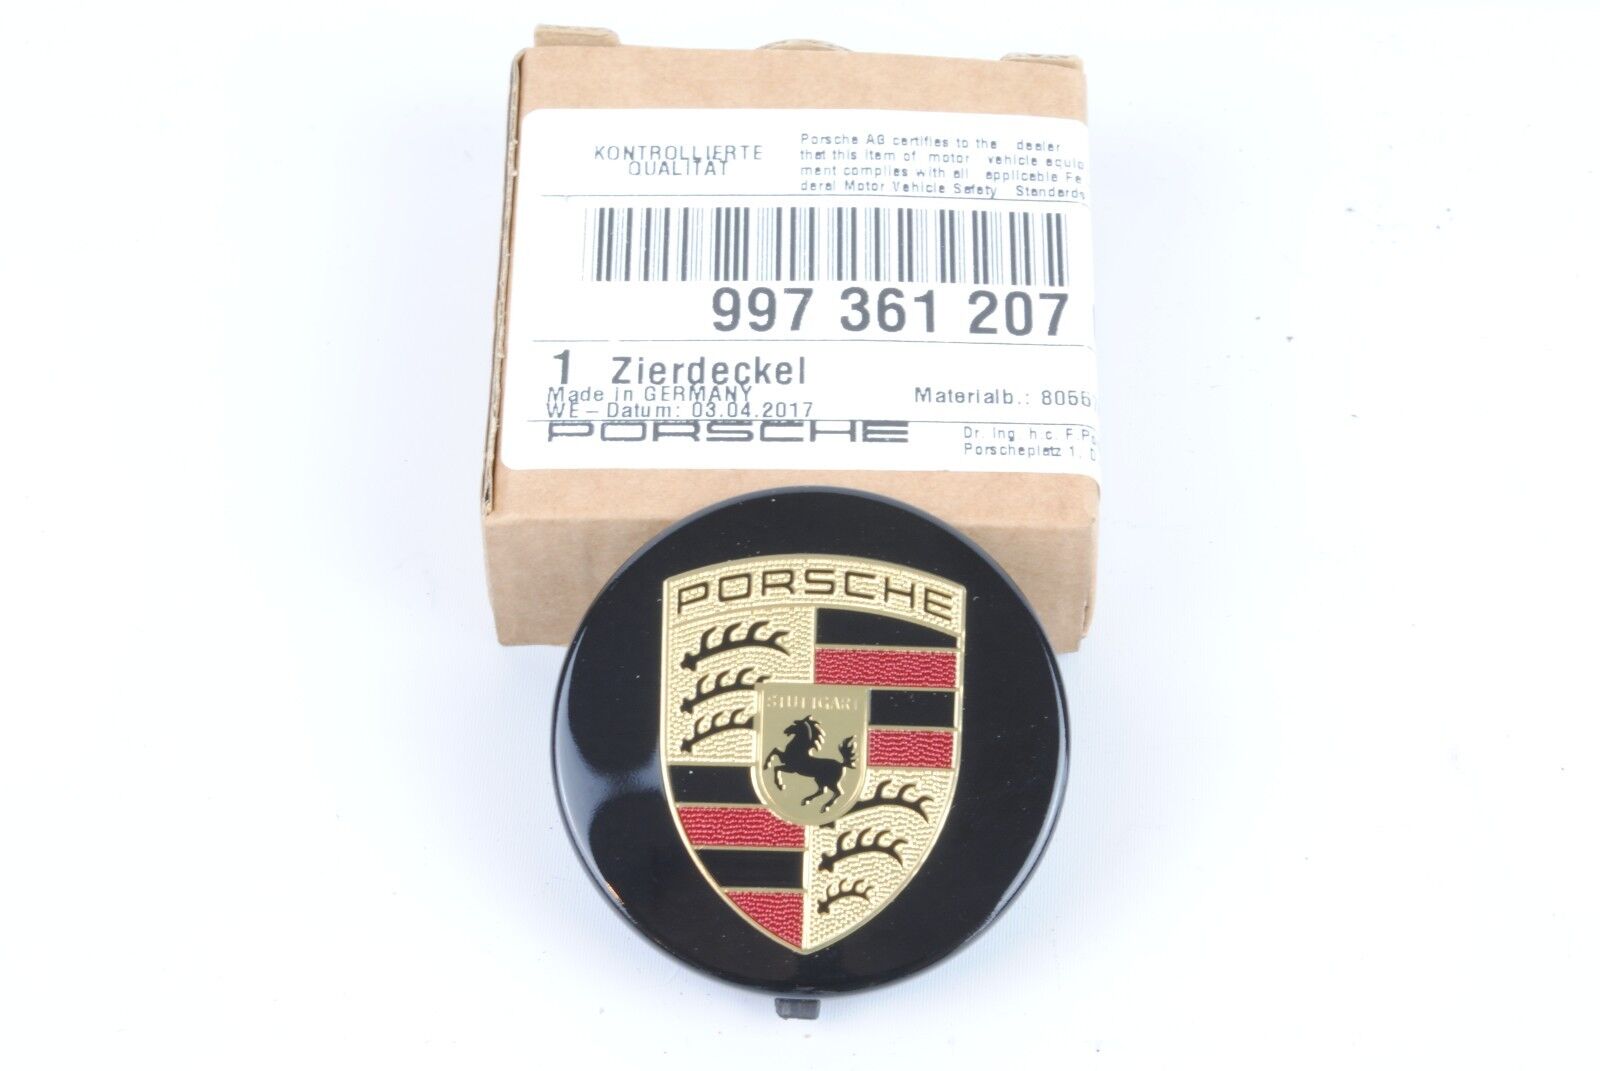 Genuine Porsche 997 Center Lock Wheel Cap Black 997-361-207-04 GT3/GTS/Turbo S